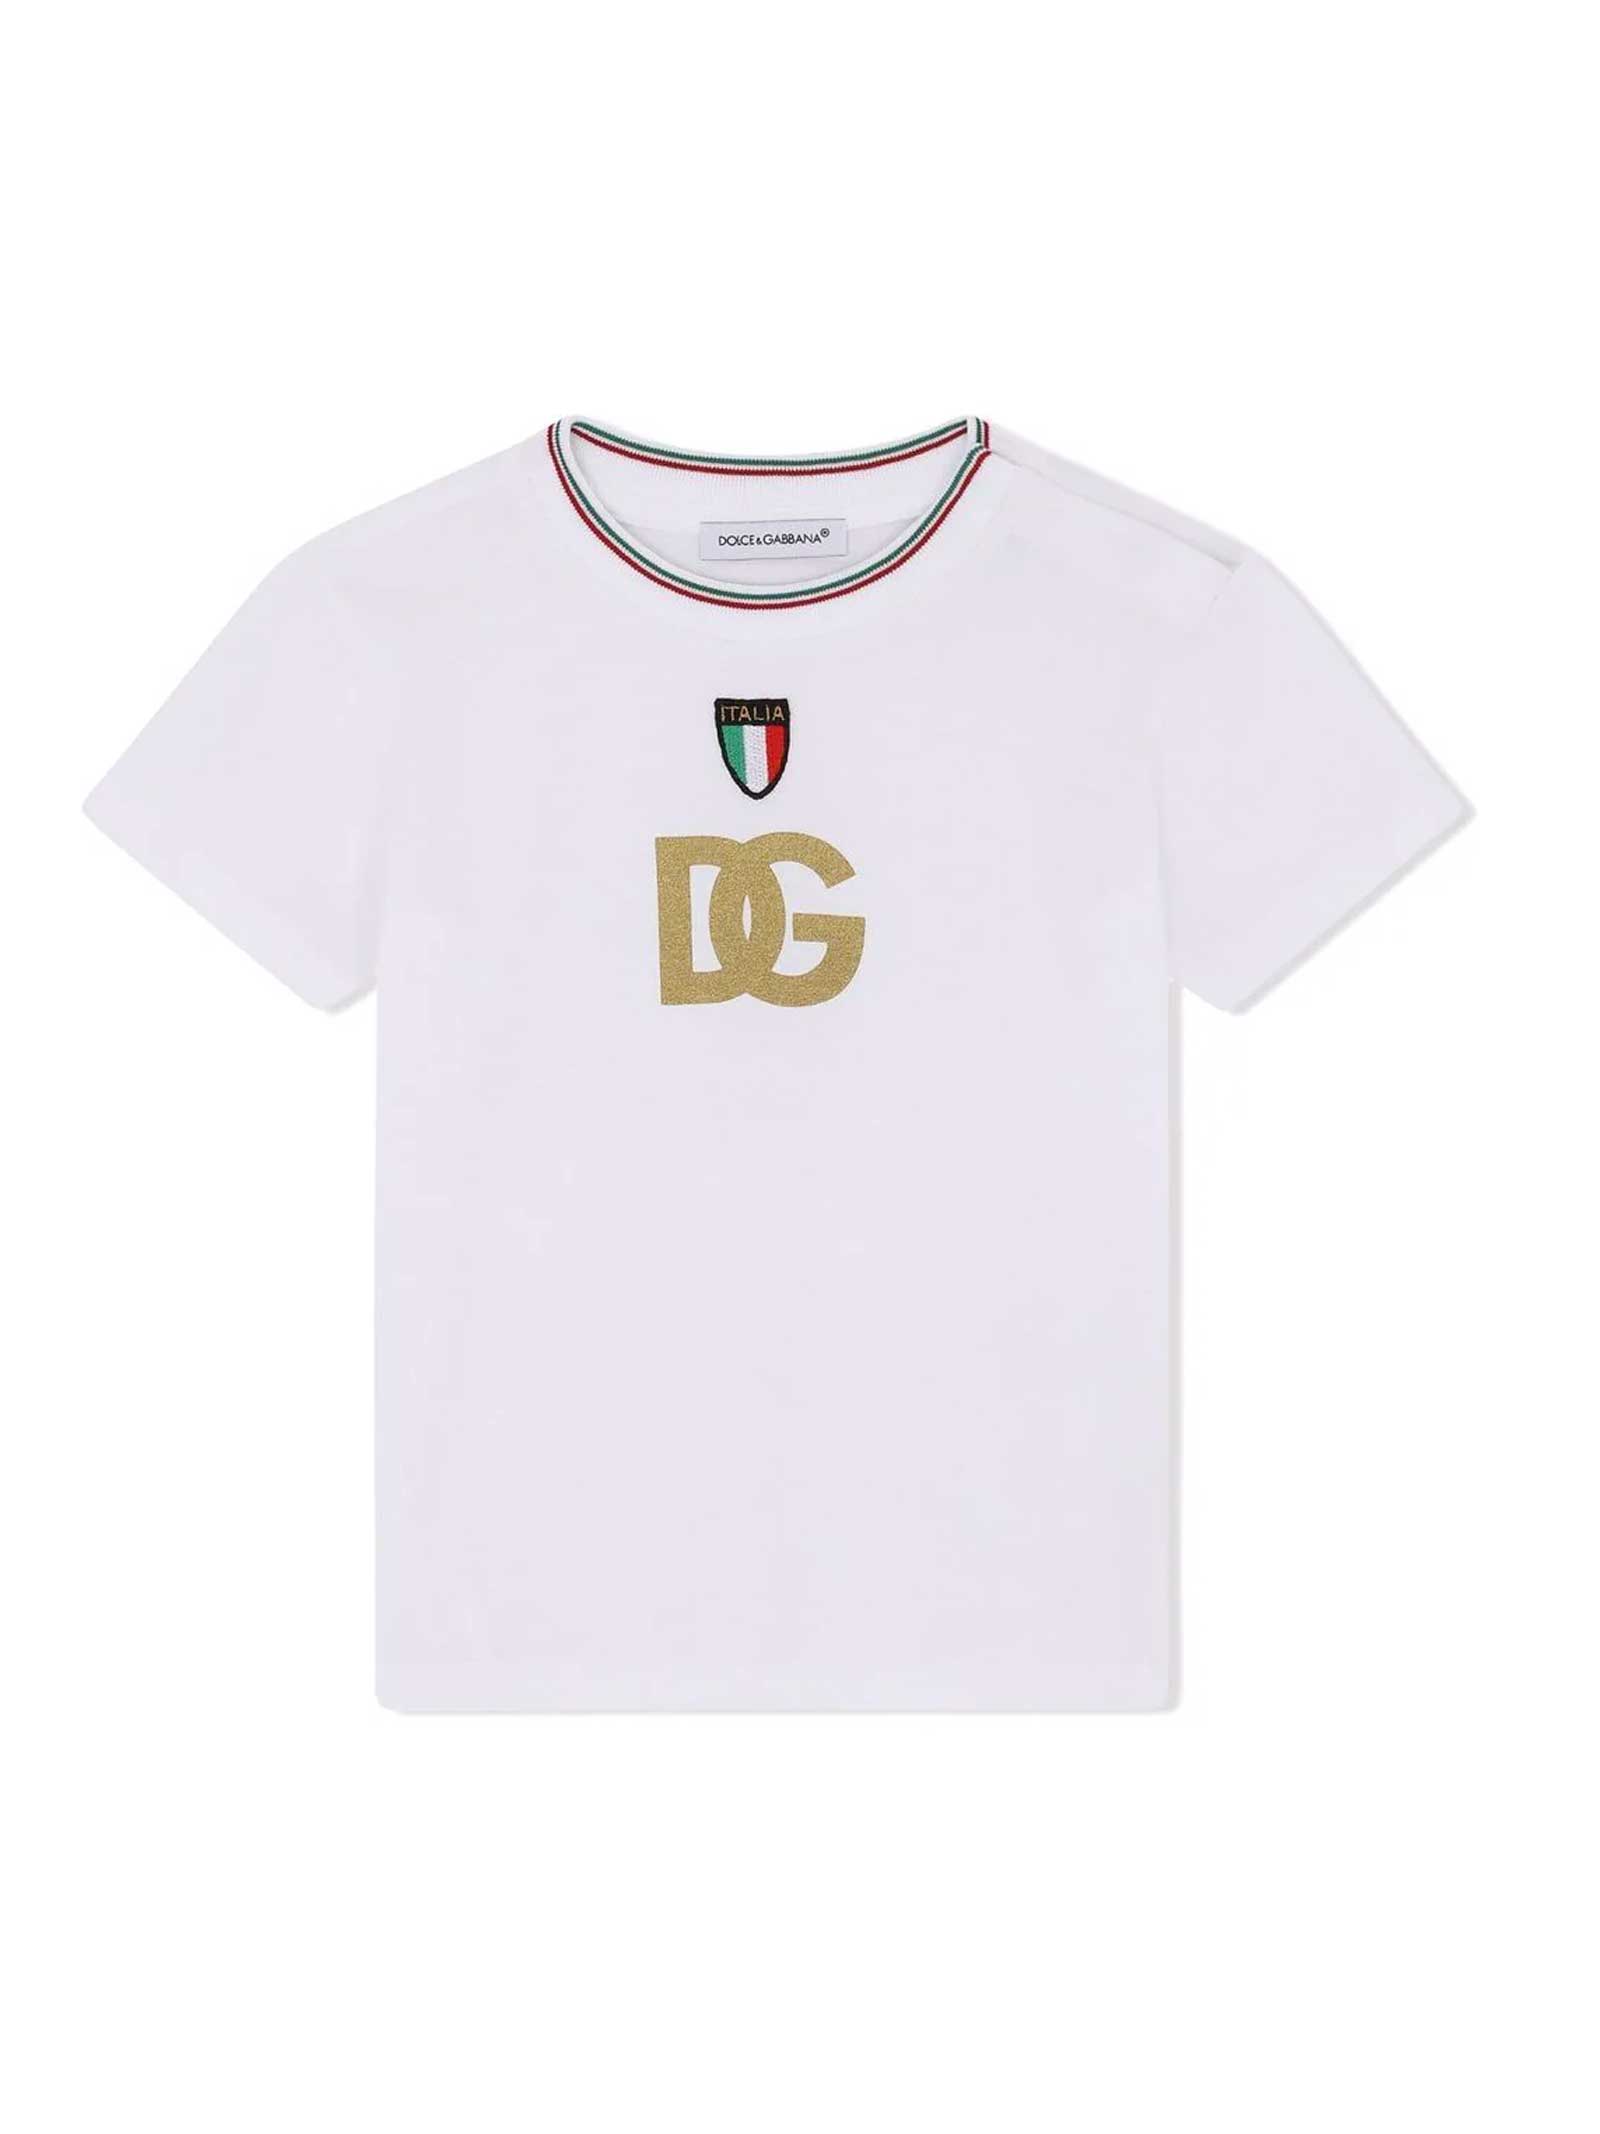 Dolce & Gabbana White T-shirt With Italia Applications Dolce & gabbana Kids